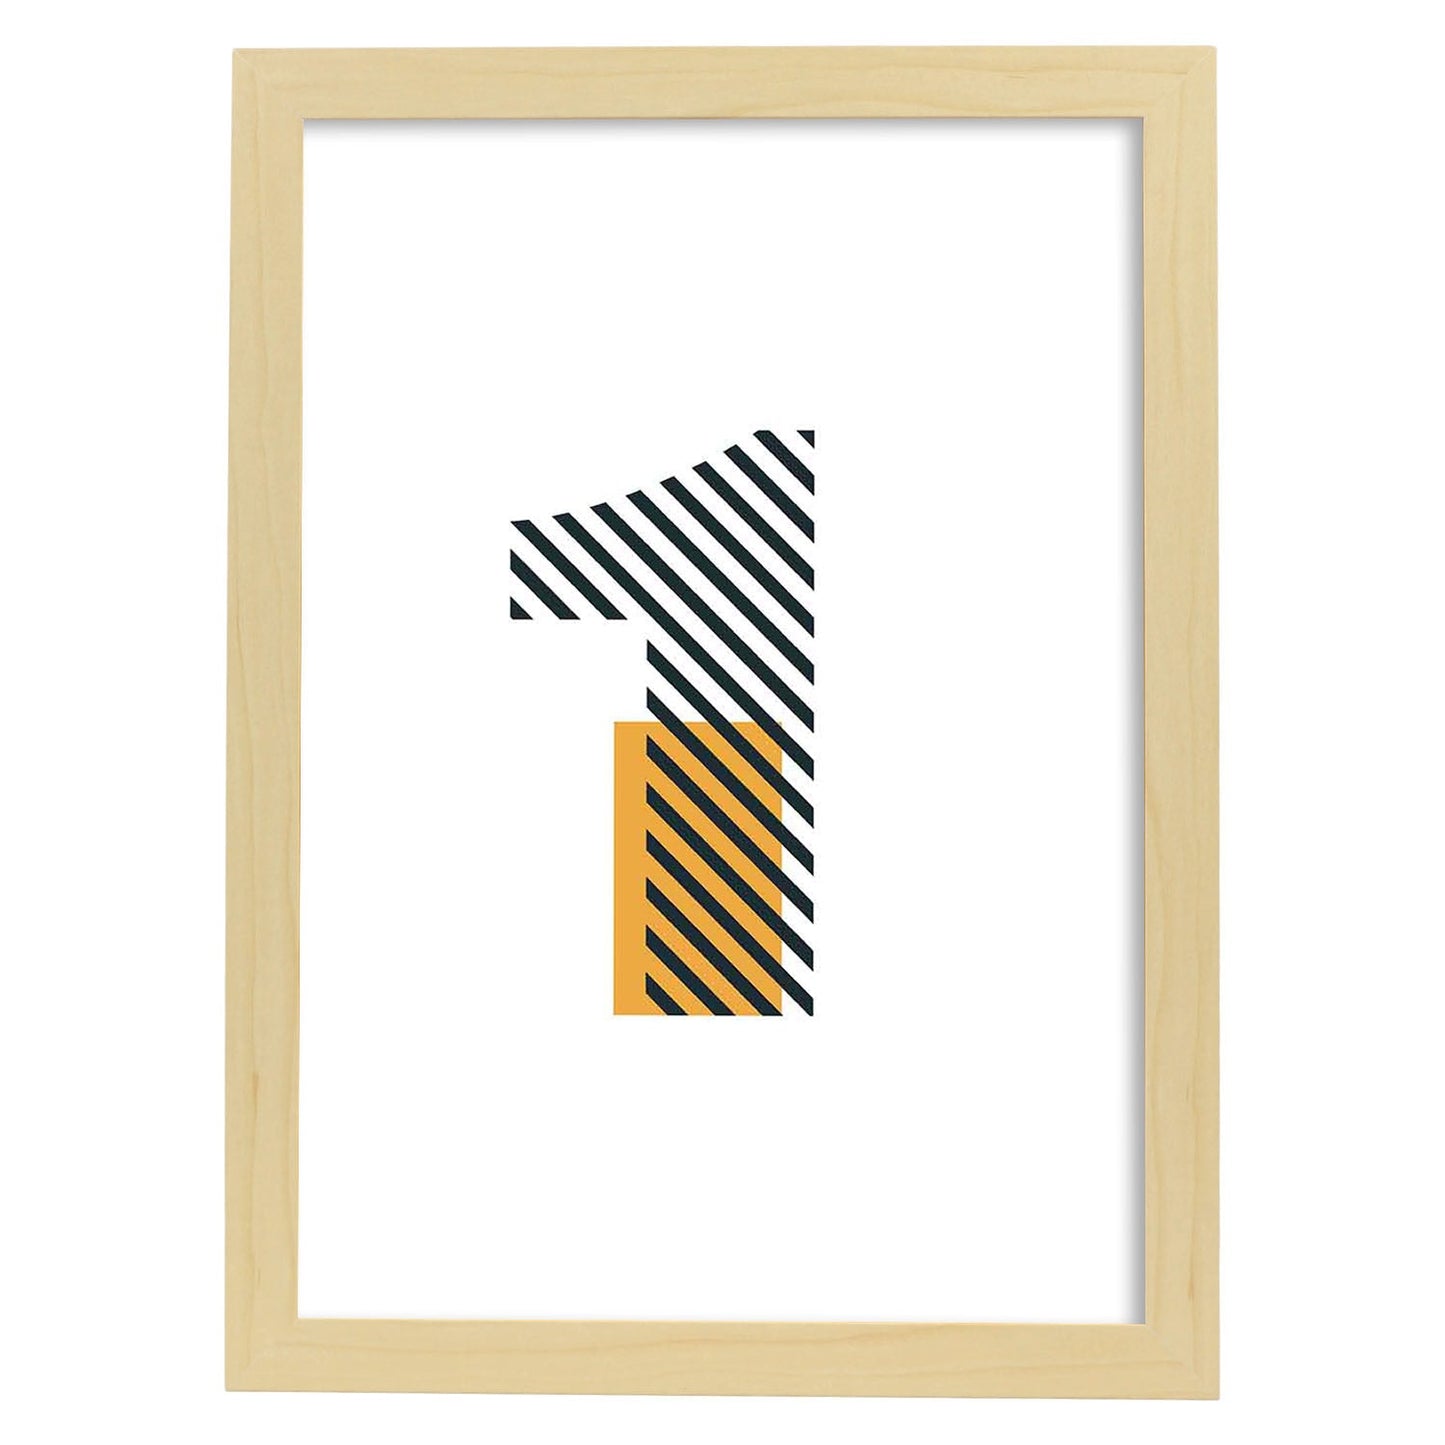 Poster de número 1. Lámina estilo Geometria con imágenes del alfabeto.-Artwork-Nacnic-A4-Marco Madera clara-Nacnic Estudio SL